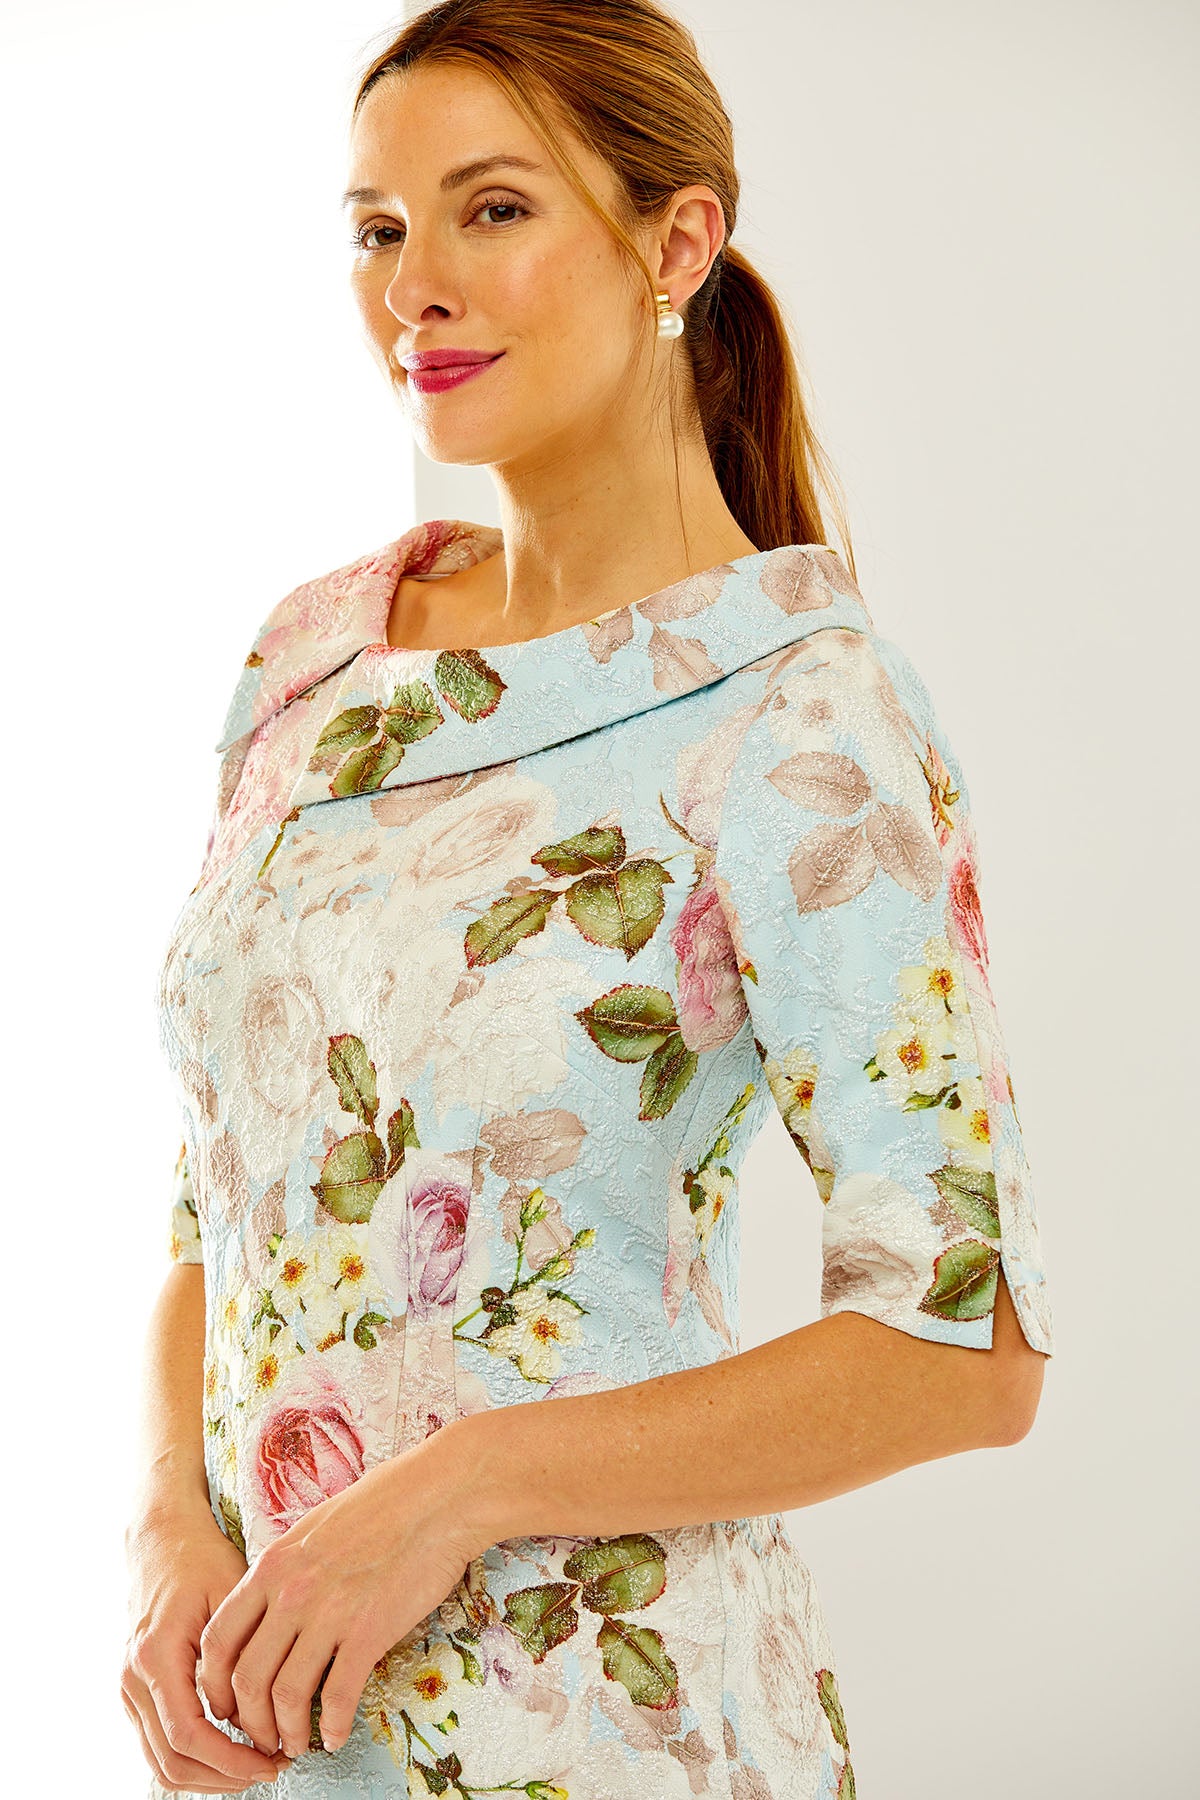 Woman in a floral sheath dress